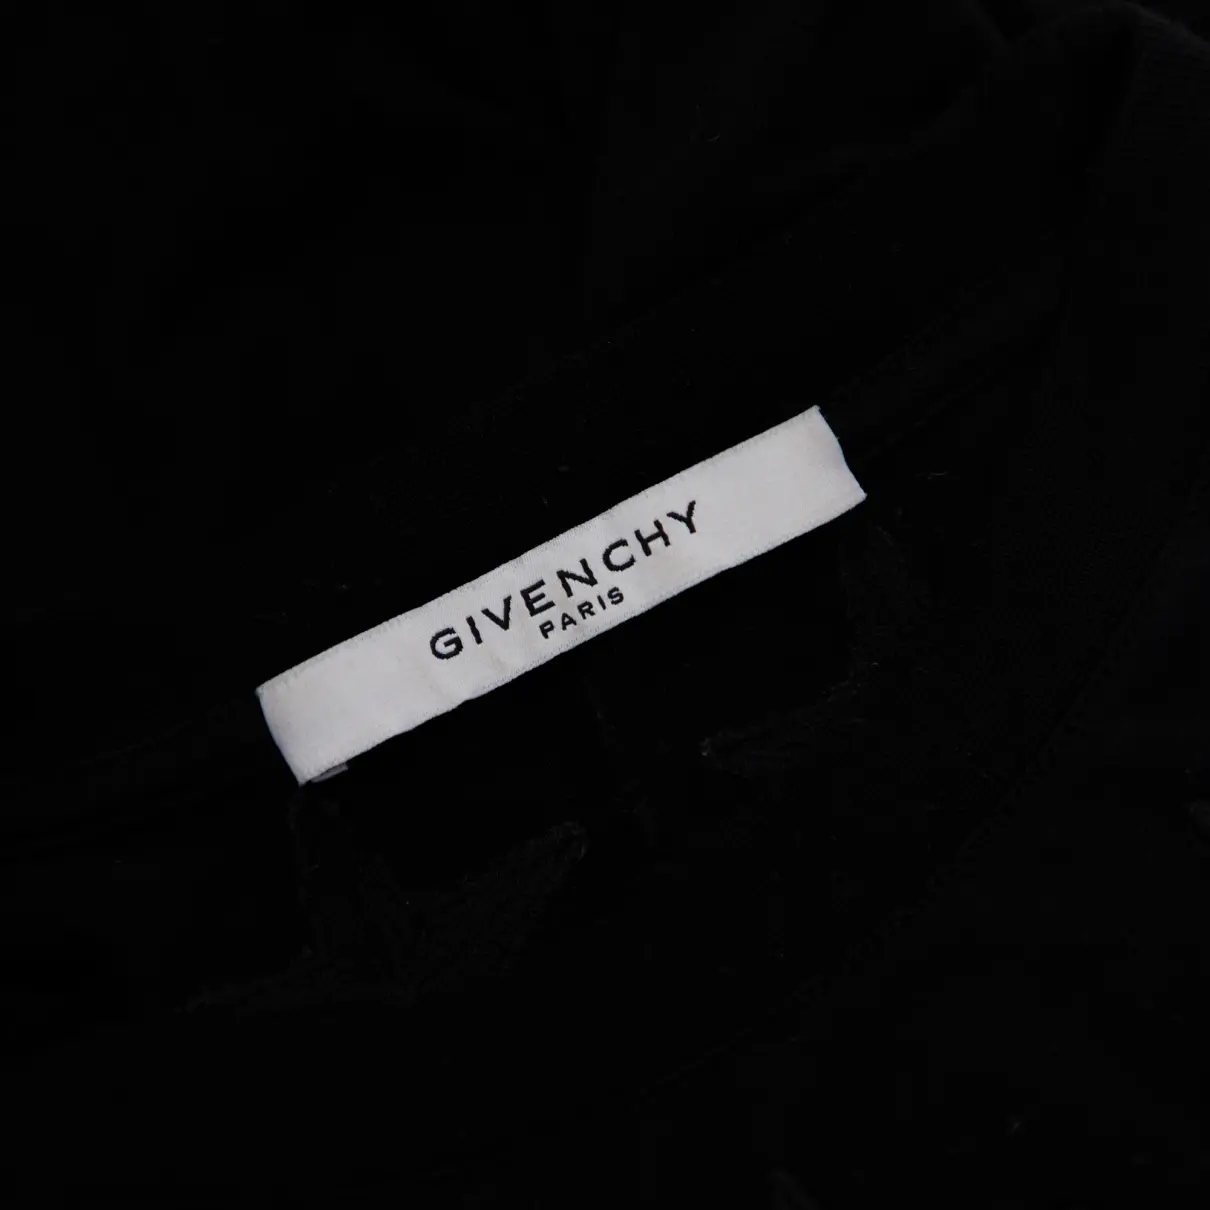 Luxury Givenchy T-shirts Men